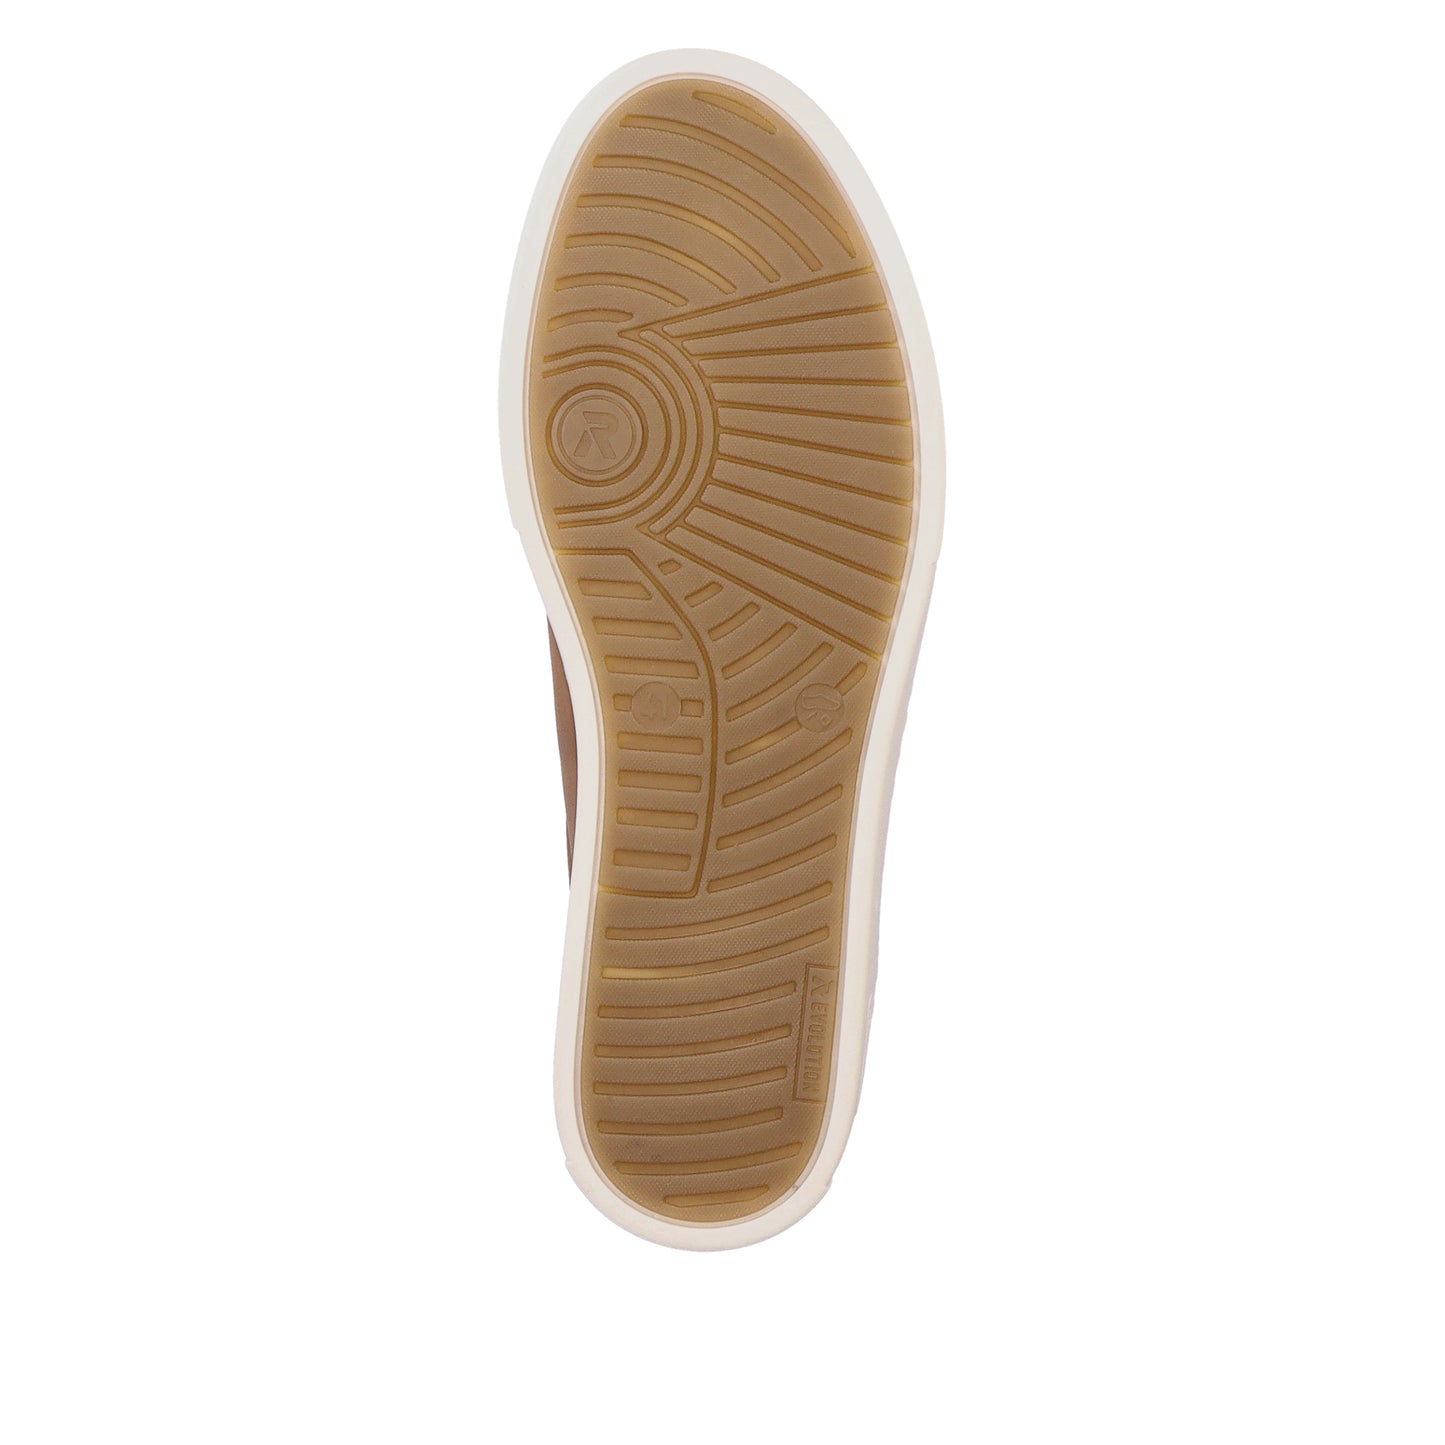 U0700-24 Brown Lace Up Sneaker